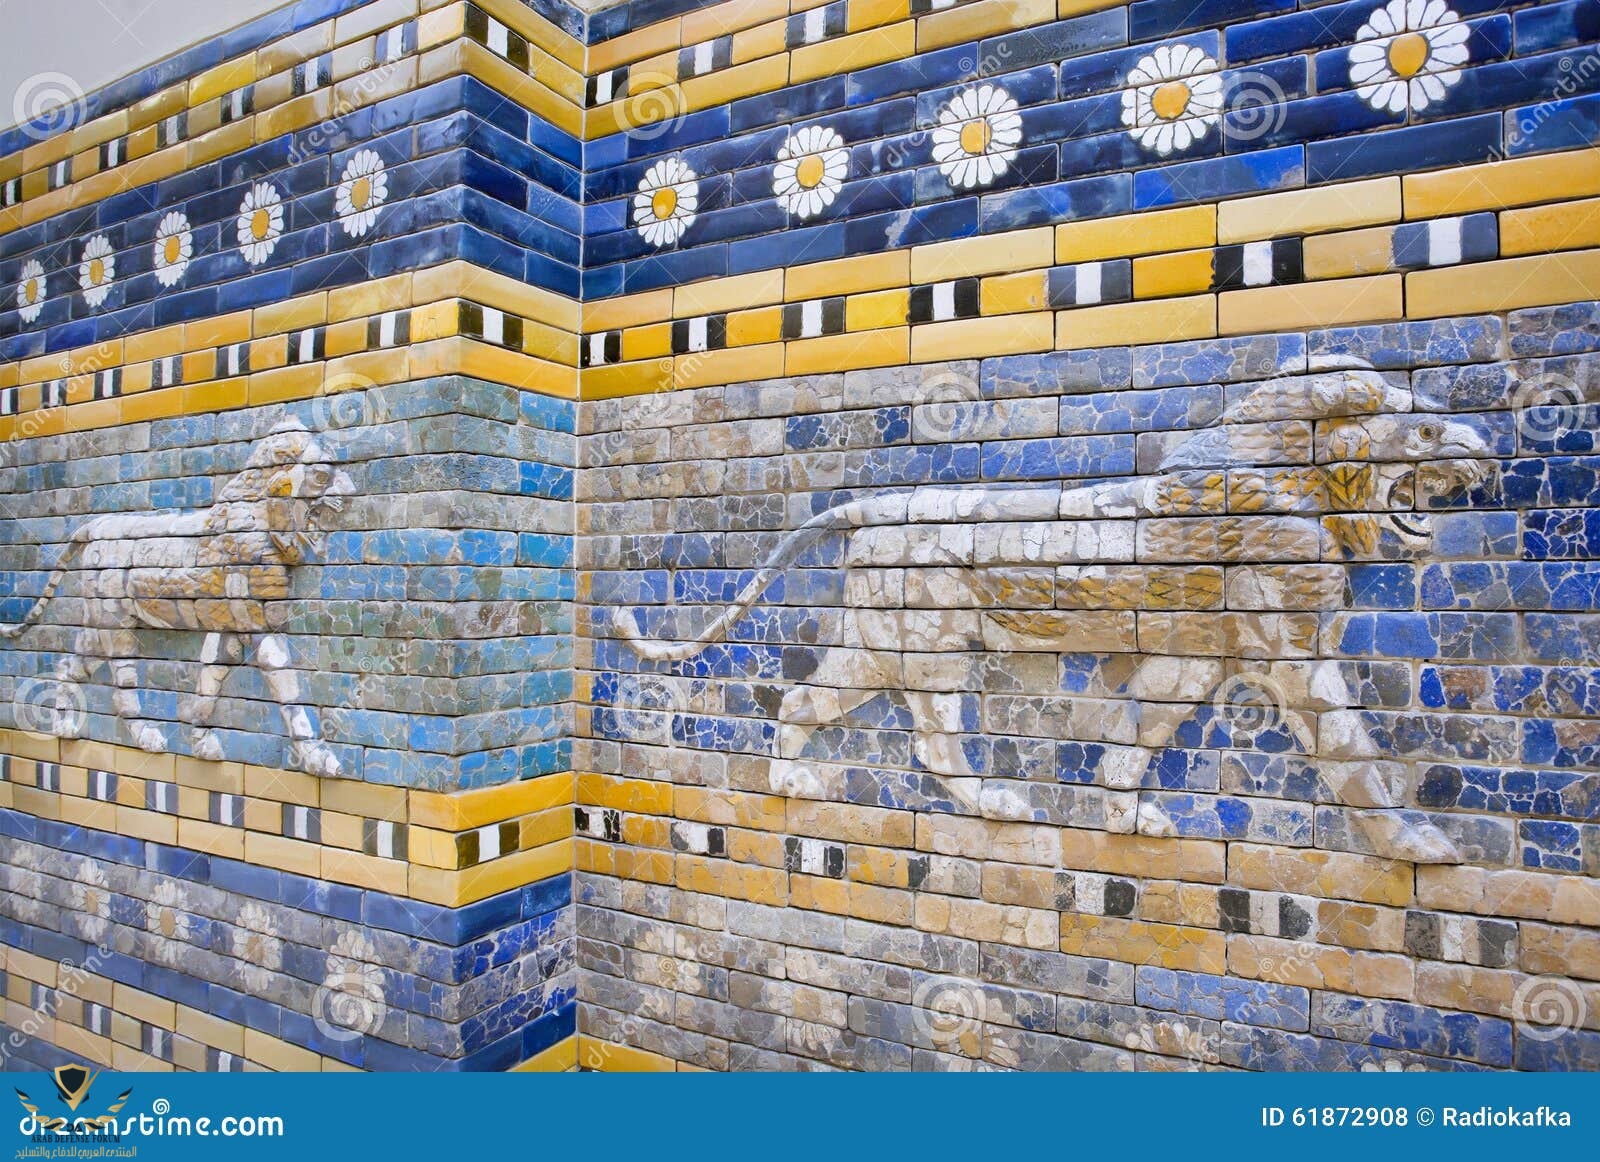 lions-following-hunt-patterned-wall-historical-city-babylon-artifact-saved-pergamon-museum-ber...jpg